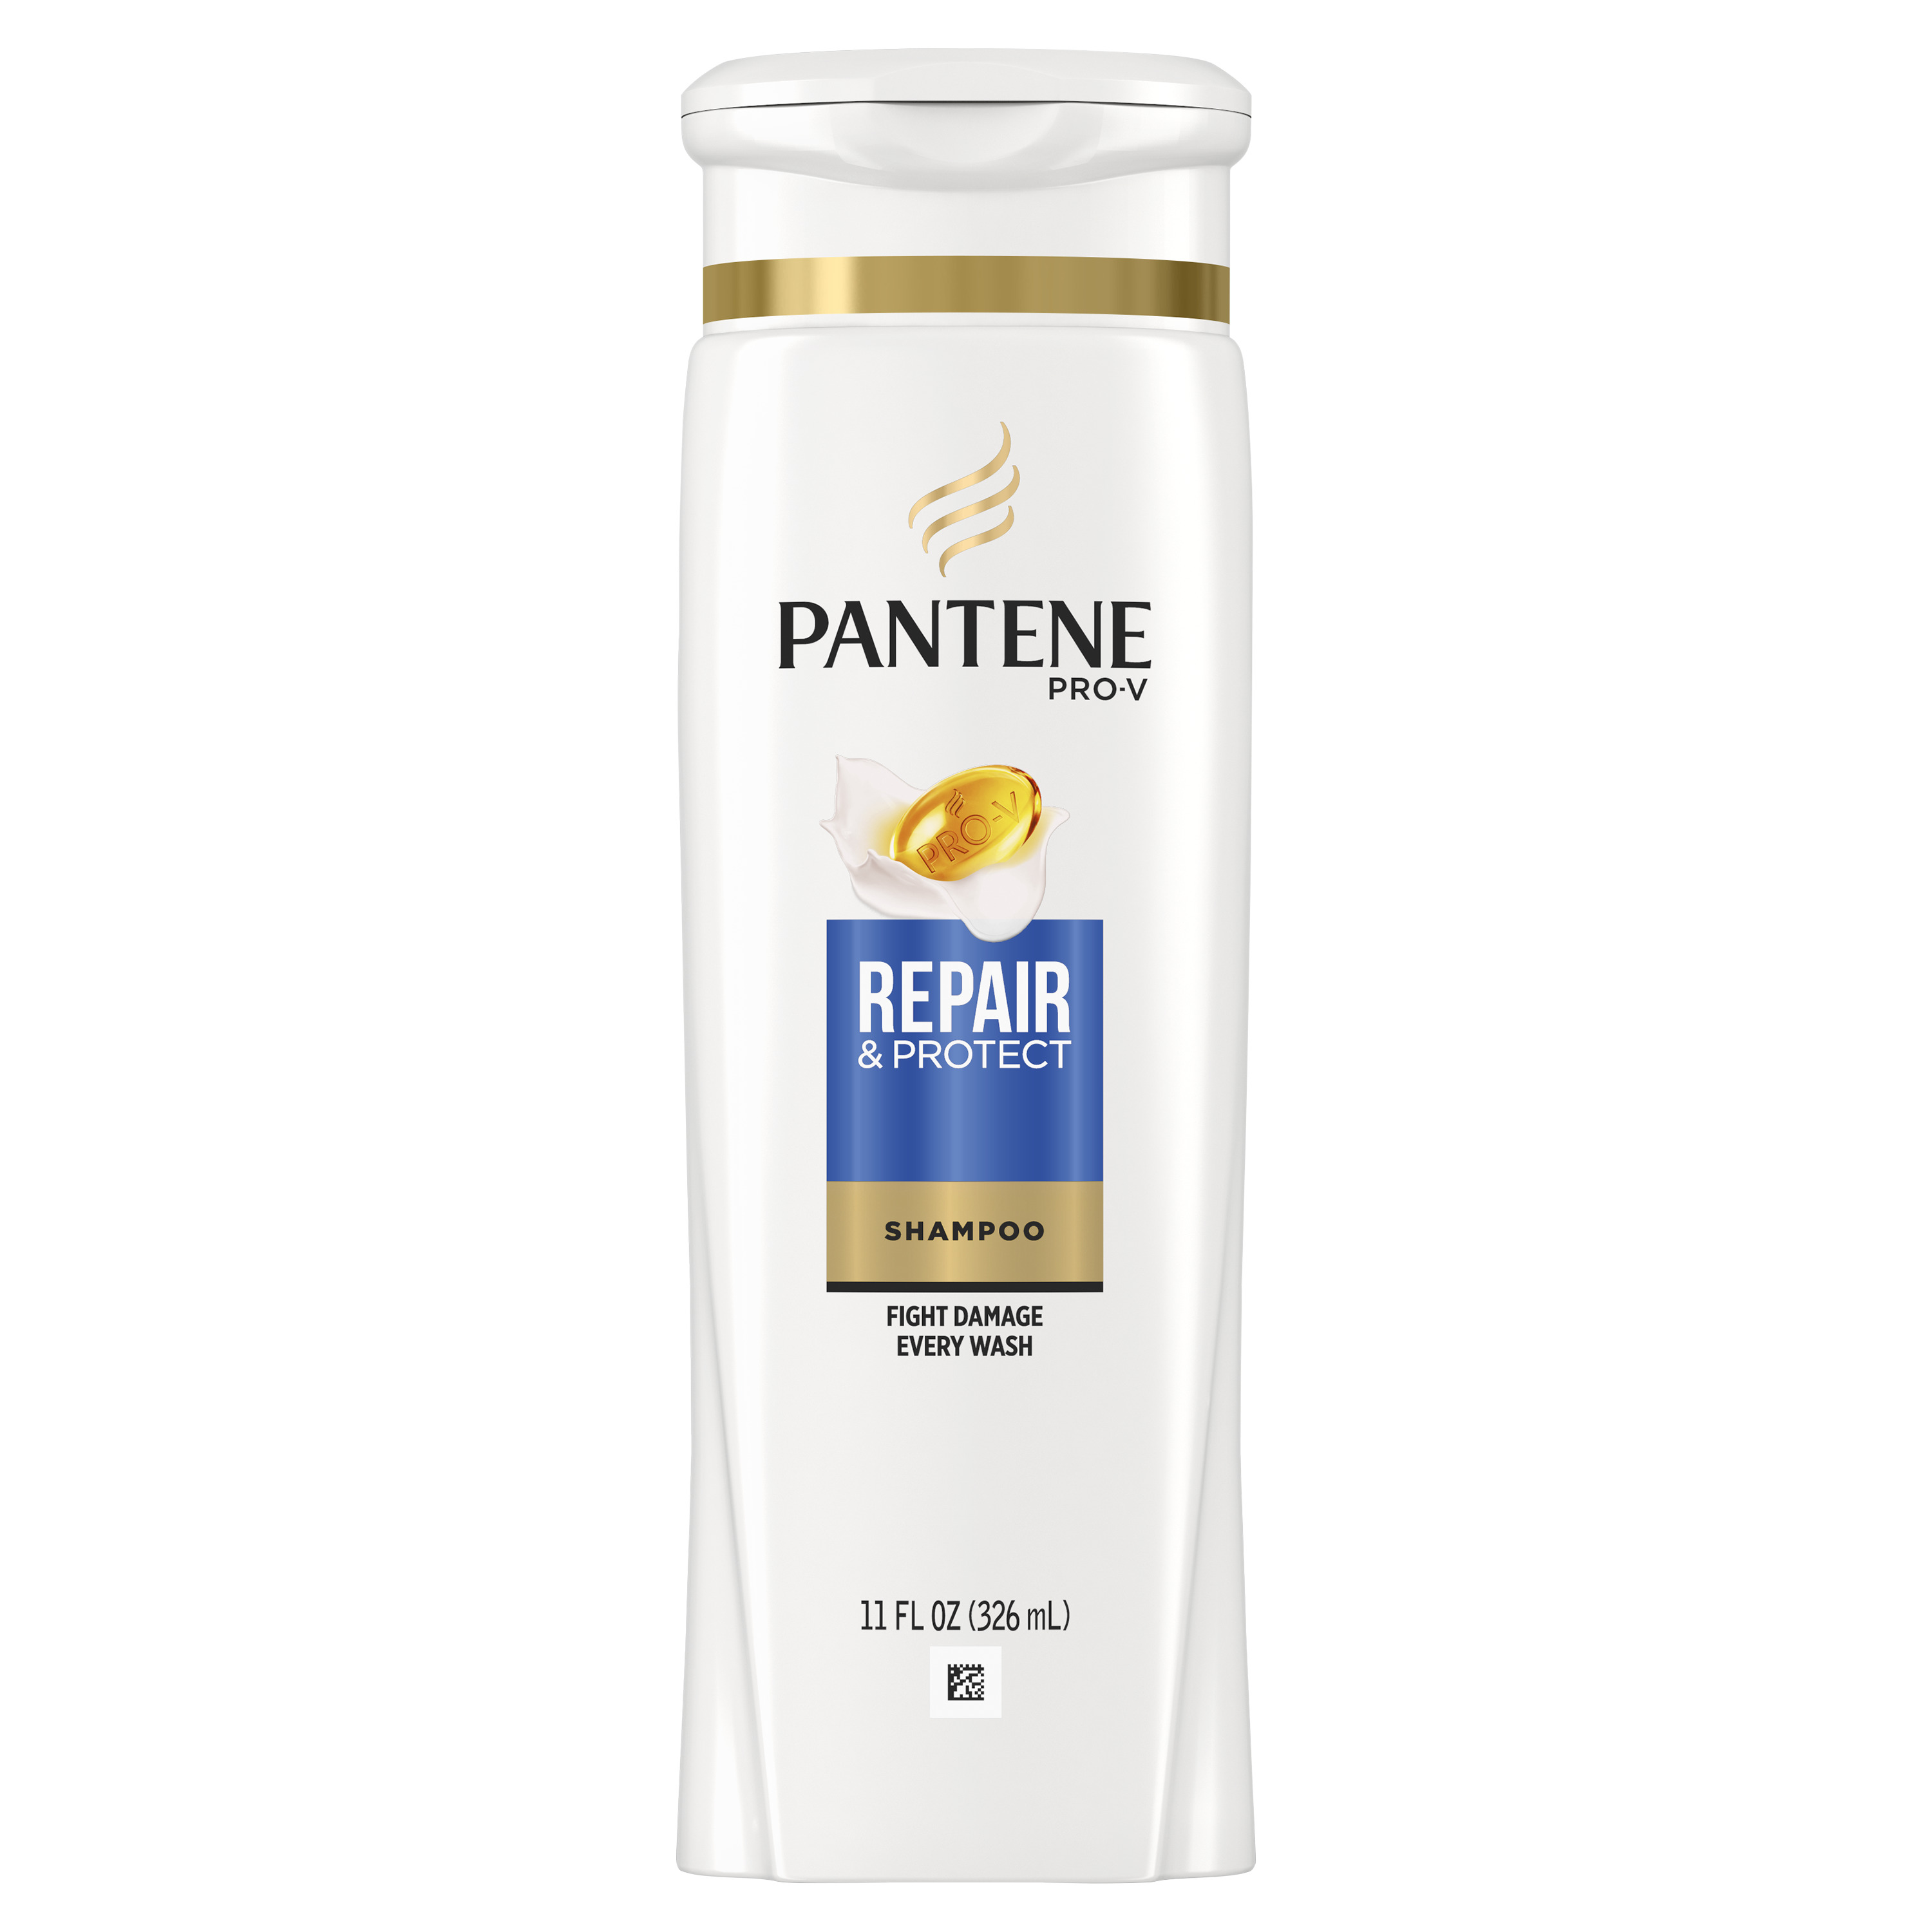 Pantene Pro-V Repair and Protect Repairing Detangling Daily Shampoo, 11 fl oz - image 1 of 7